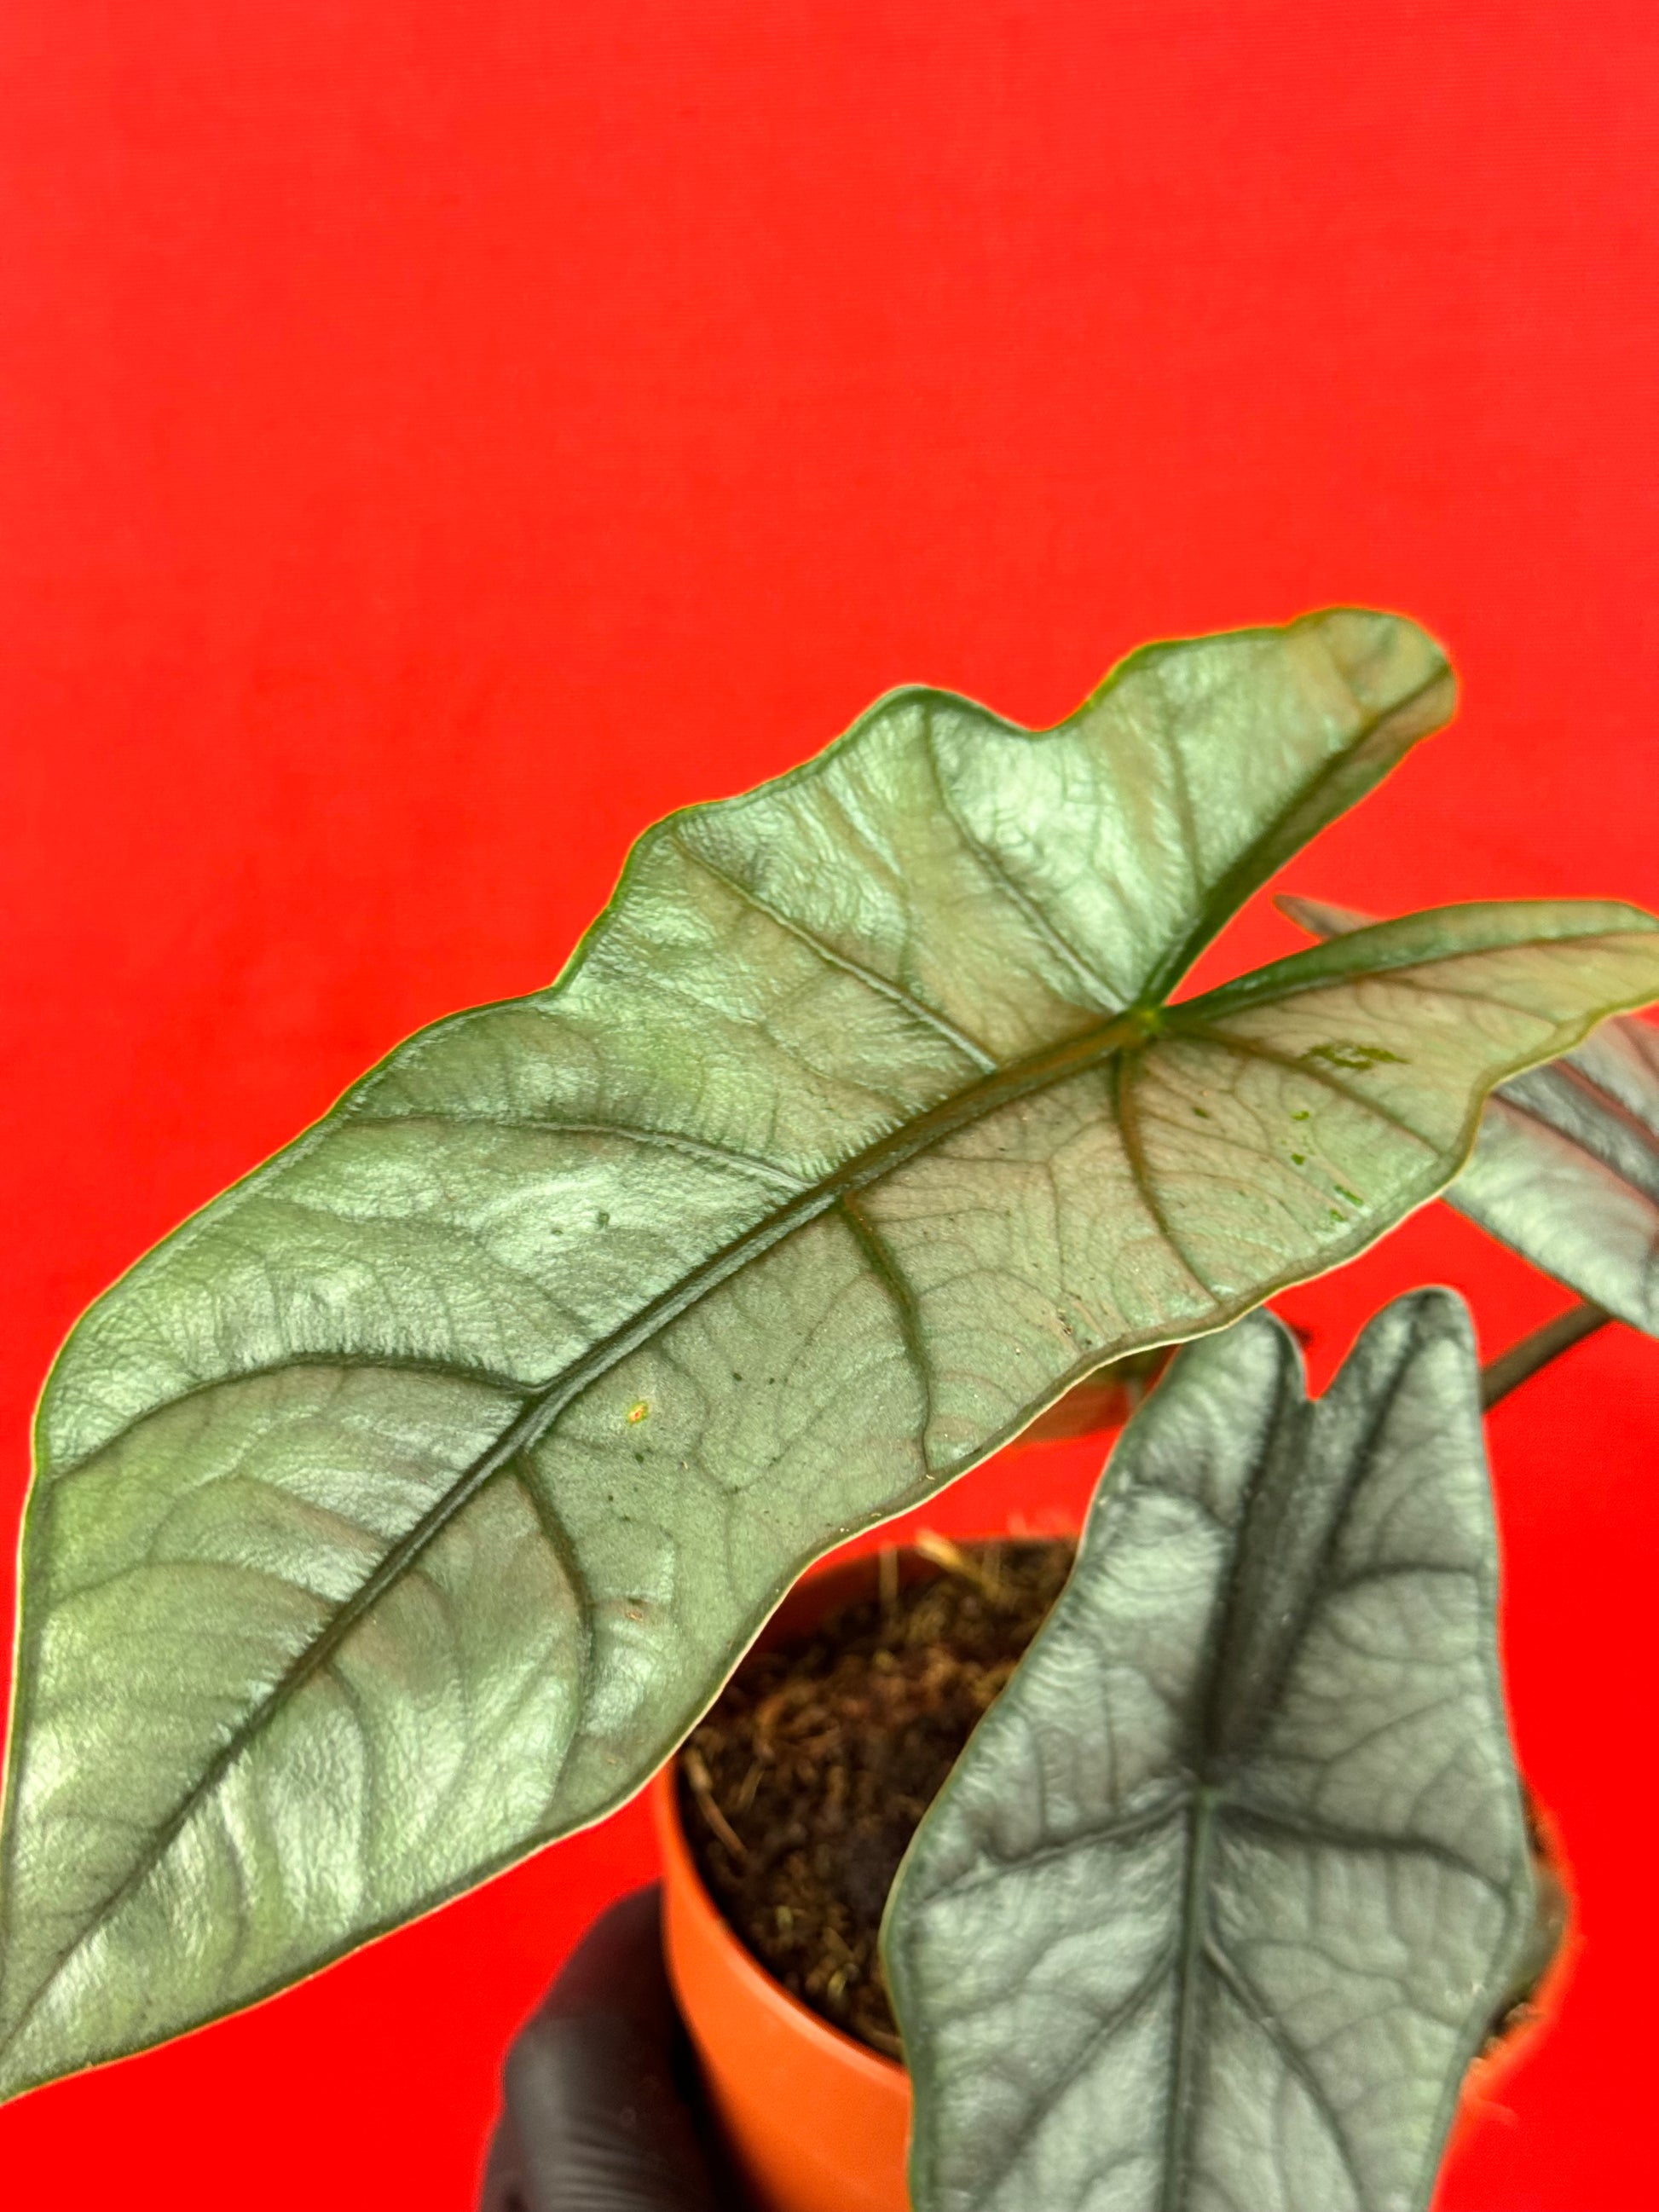 Alocasia heterophylla - LUplnts